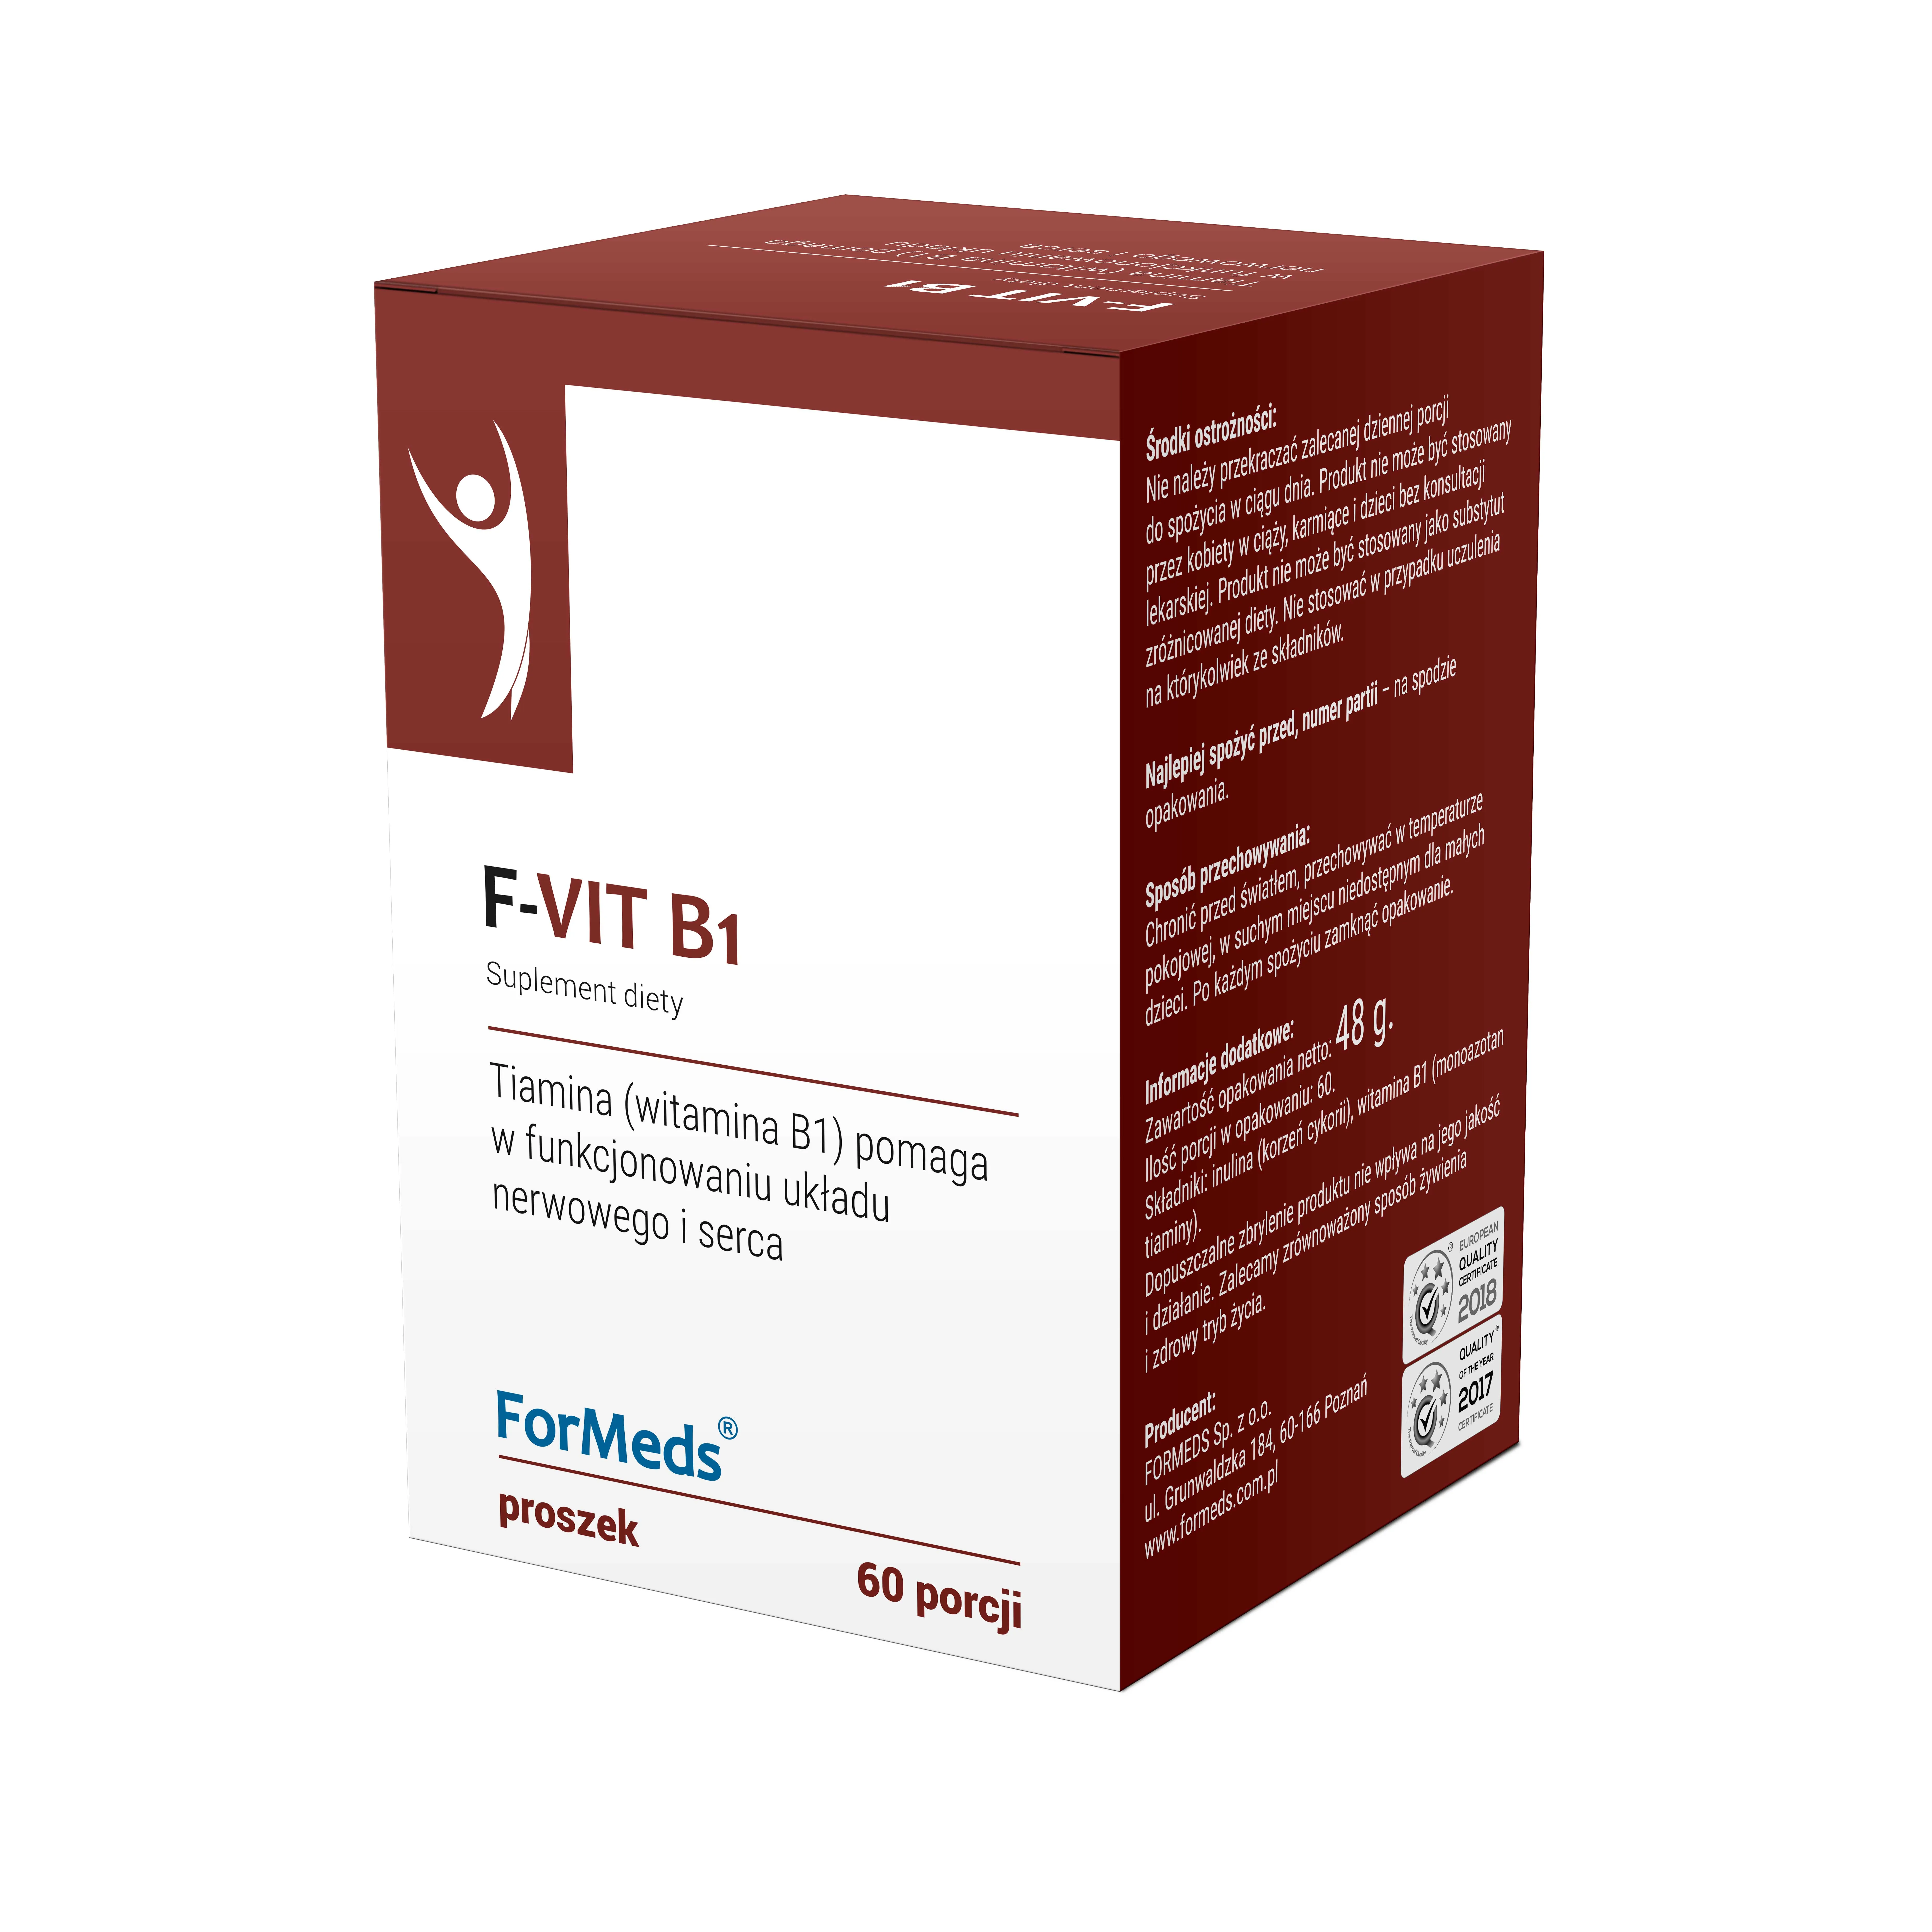 ForMeds F-VIT B1, suplement diety, proszek, 60 porcji